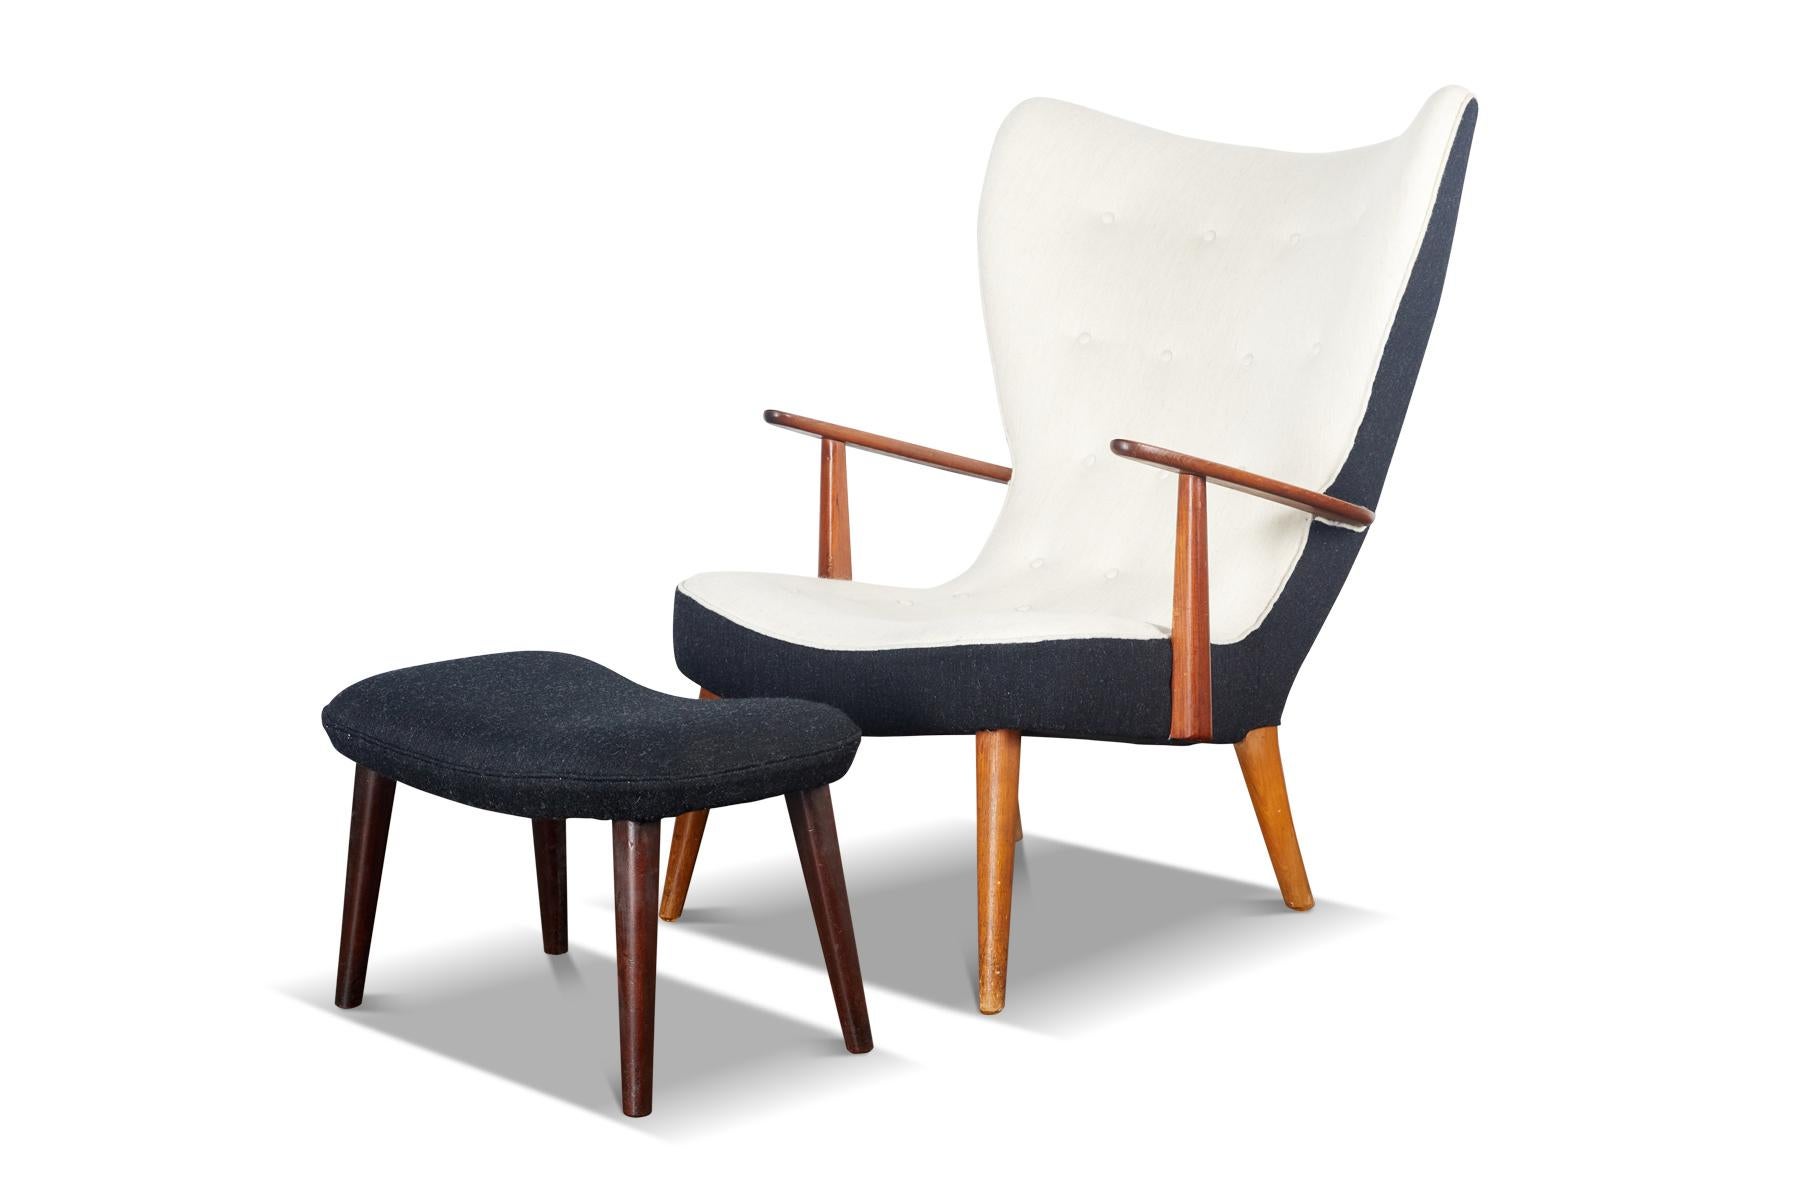 Origin: Denmark
Designer: Ib Madsen + Acton Schubell
Manufacturer: Madsen and Schubell
Era: 1959
Chair: 25.5? wide x 31? deep x 38? tall
Ottoman: 22.5? wide x 13? deep x 14.5? tall

Condition: In excellent original condition. Newer upholstery